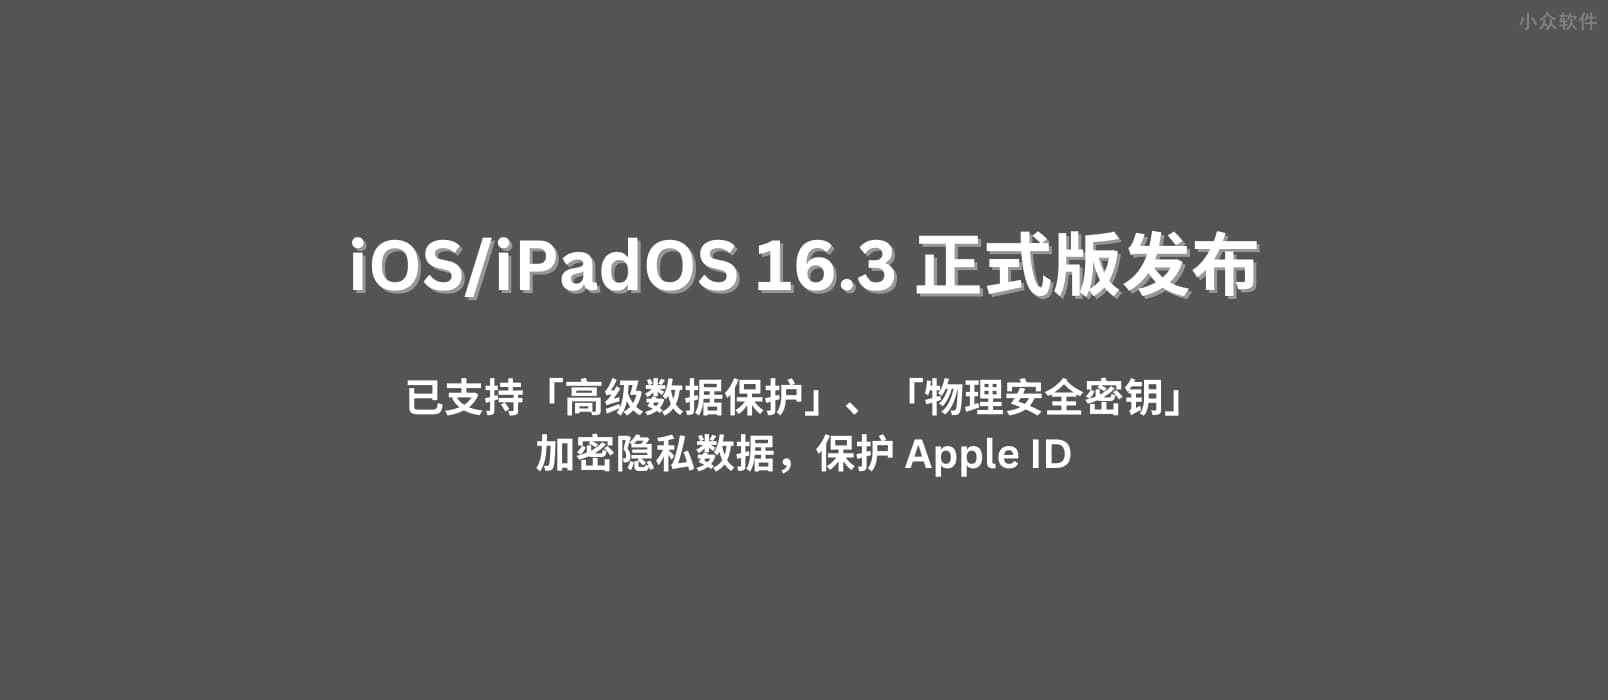 iOS/iPadOS 16.3 正式版发布，已支持「高级数据保护」「物理安全密钥」功能，加密隐私数据，保护隐私